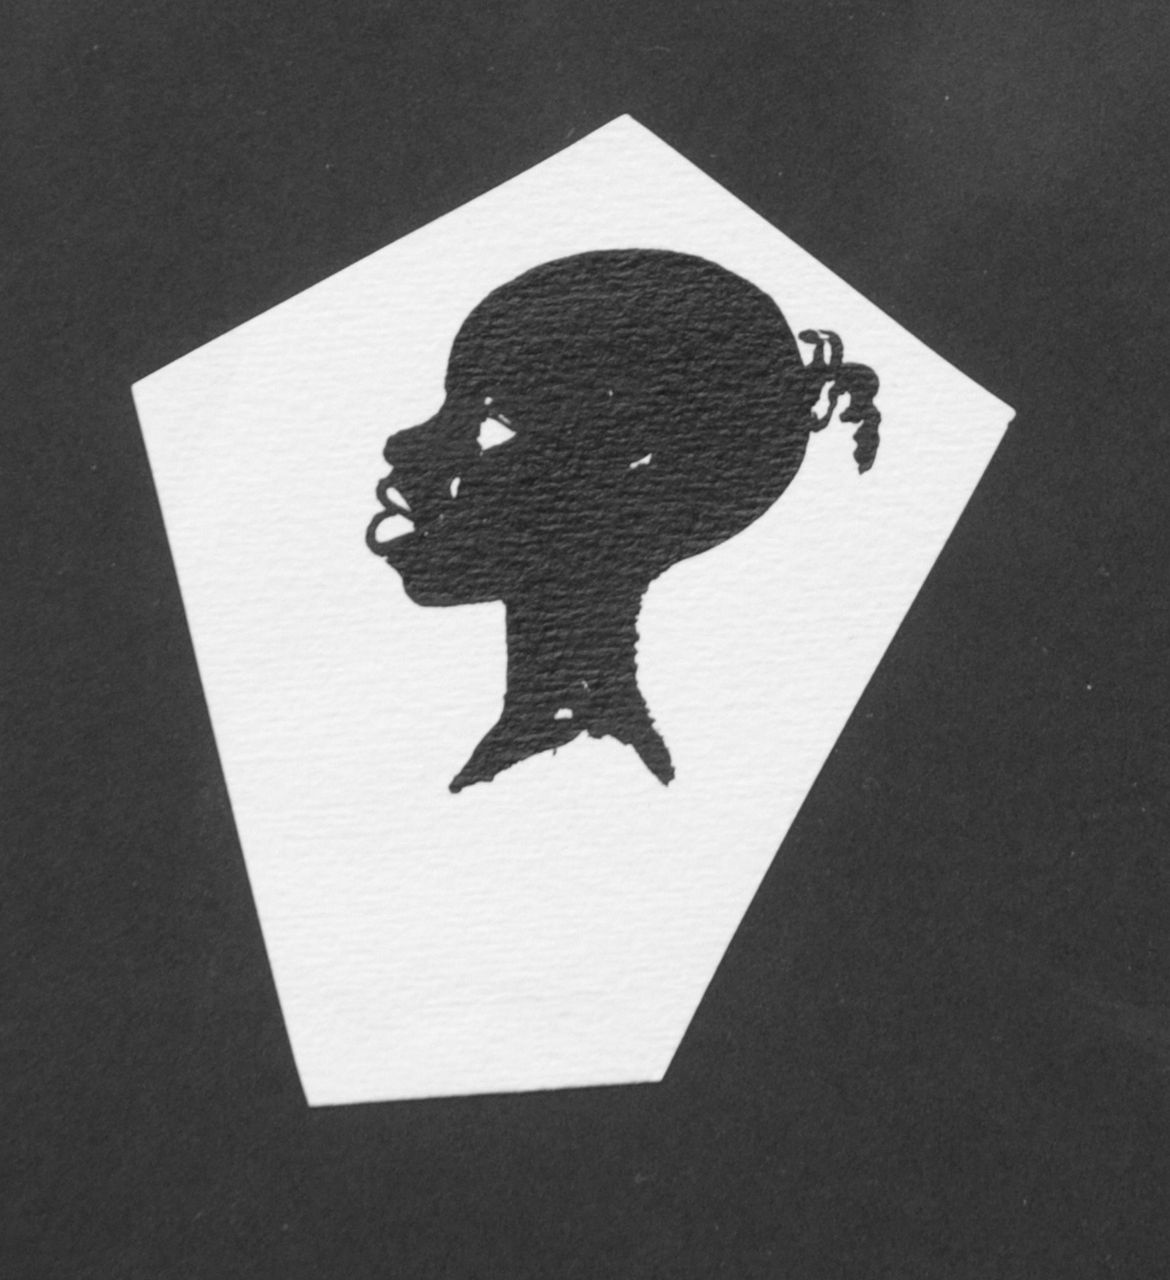 Oranje-Nassau (Prinses Beatrix) B.W.A. van | Beatrix Wilhelmina Armgard van Oranje-Nassau (Prinses Beatrix), Negro head, pencil and black ink on paper 9.0 x 8.1 cm, executed August 1960